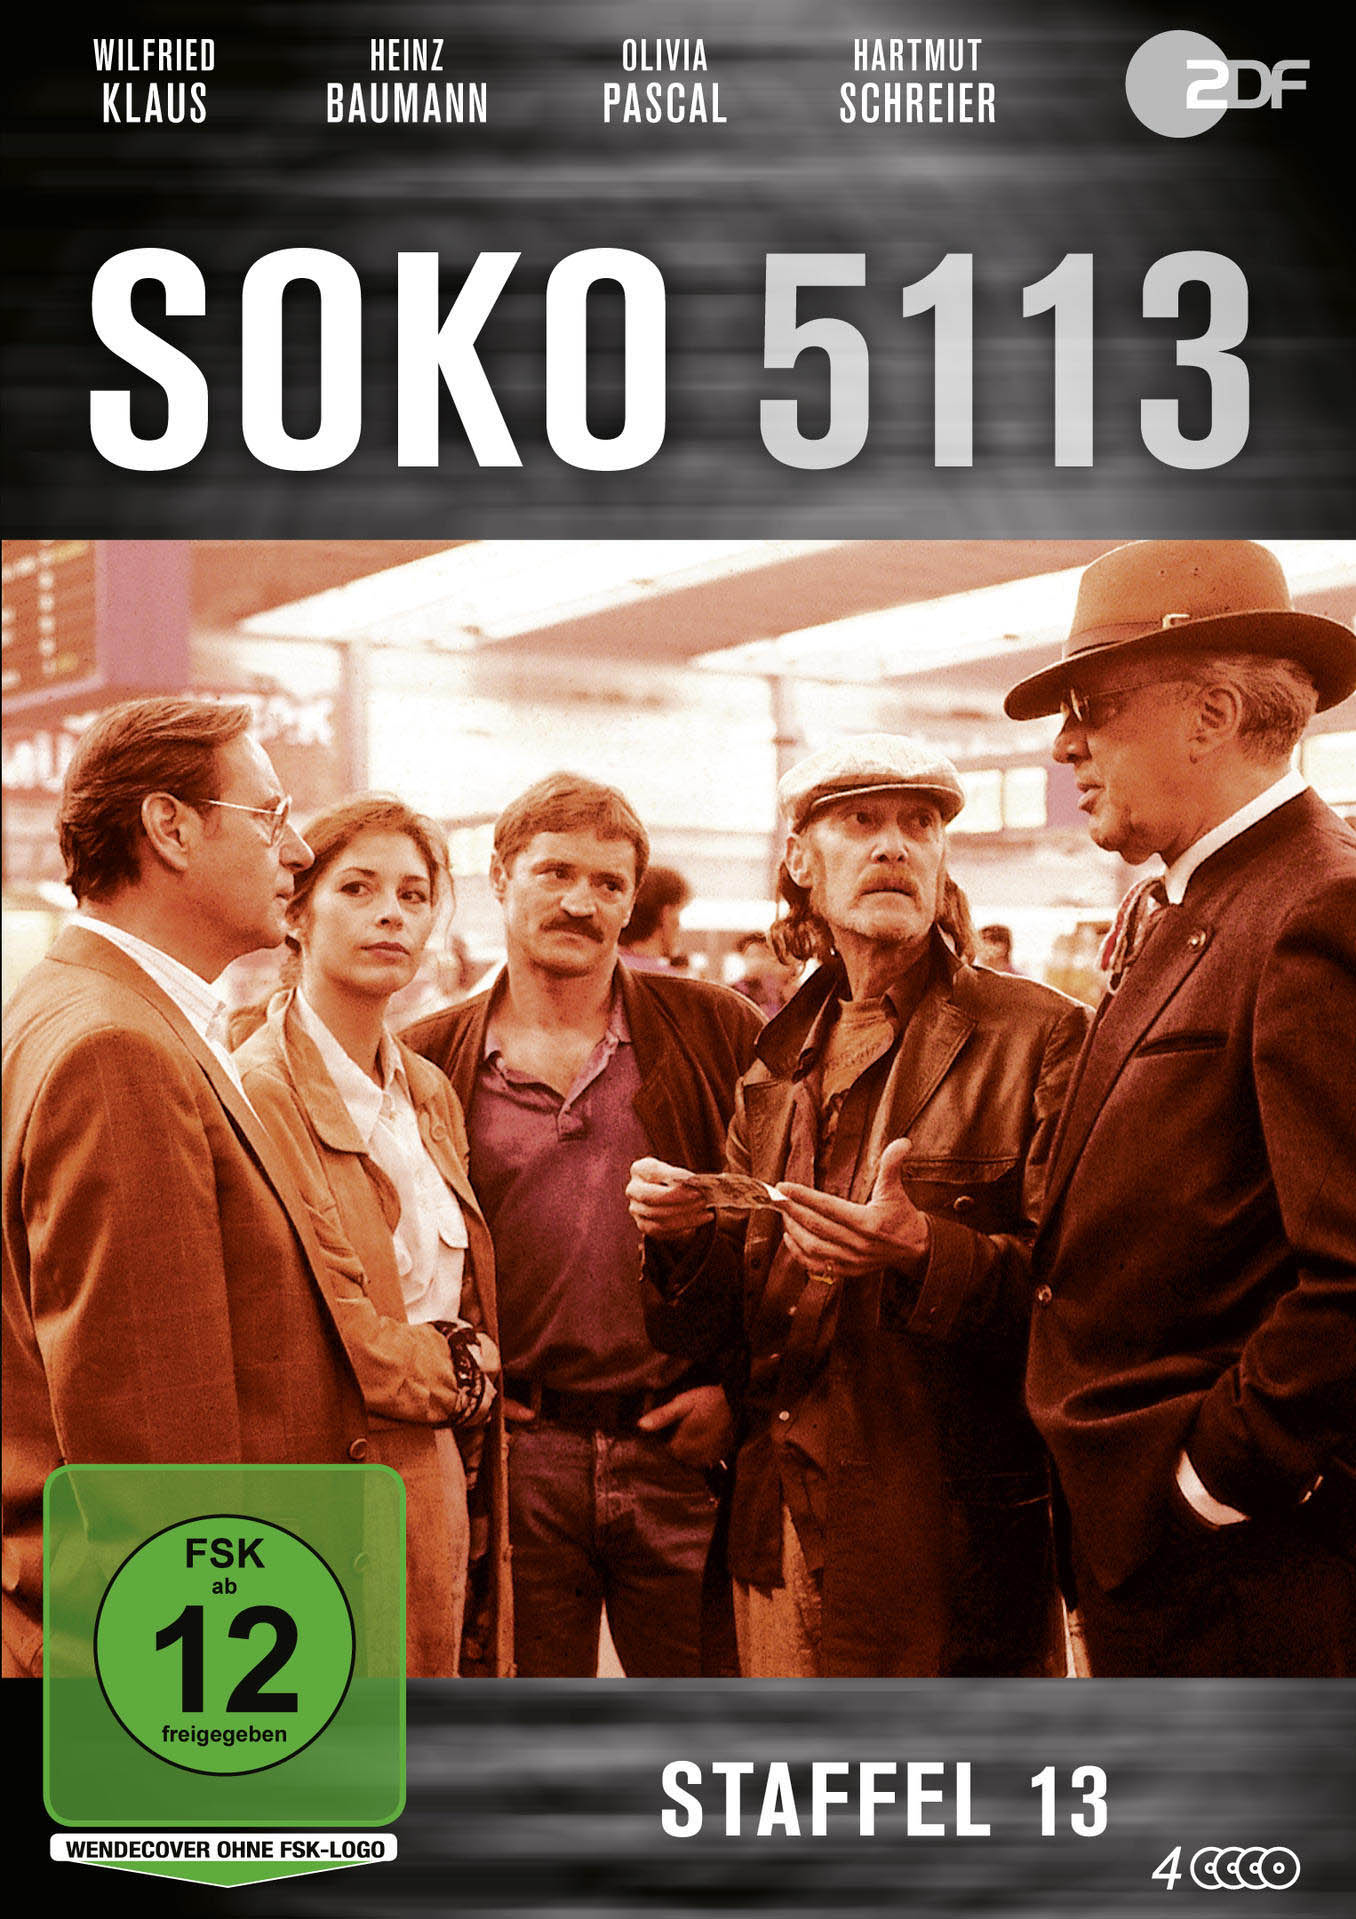 Soko 5113 - Staffel DVD 13